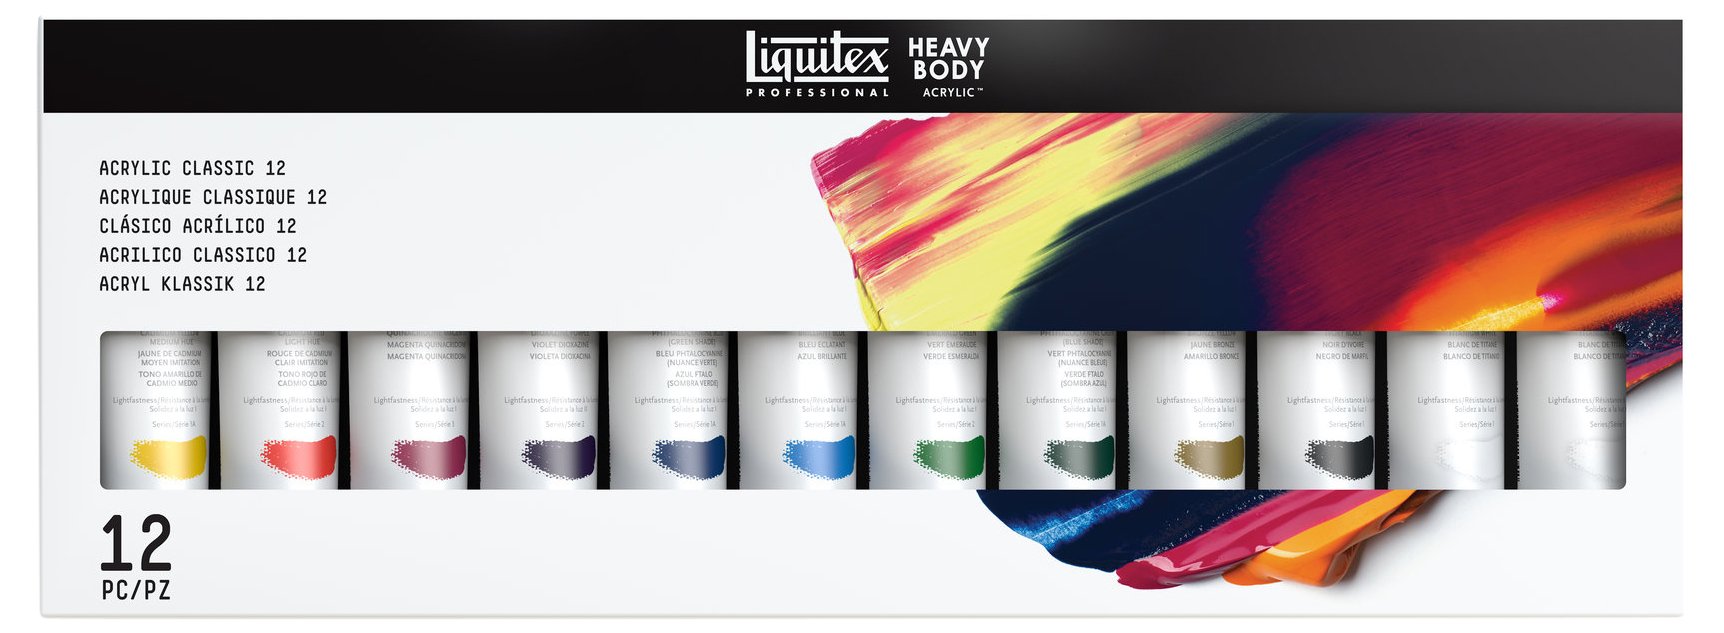 Colart Americas 1590306 Liquitex Professional Heavy Body Acrylic Paint Set, Assorted Classic Colors, Set of 12